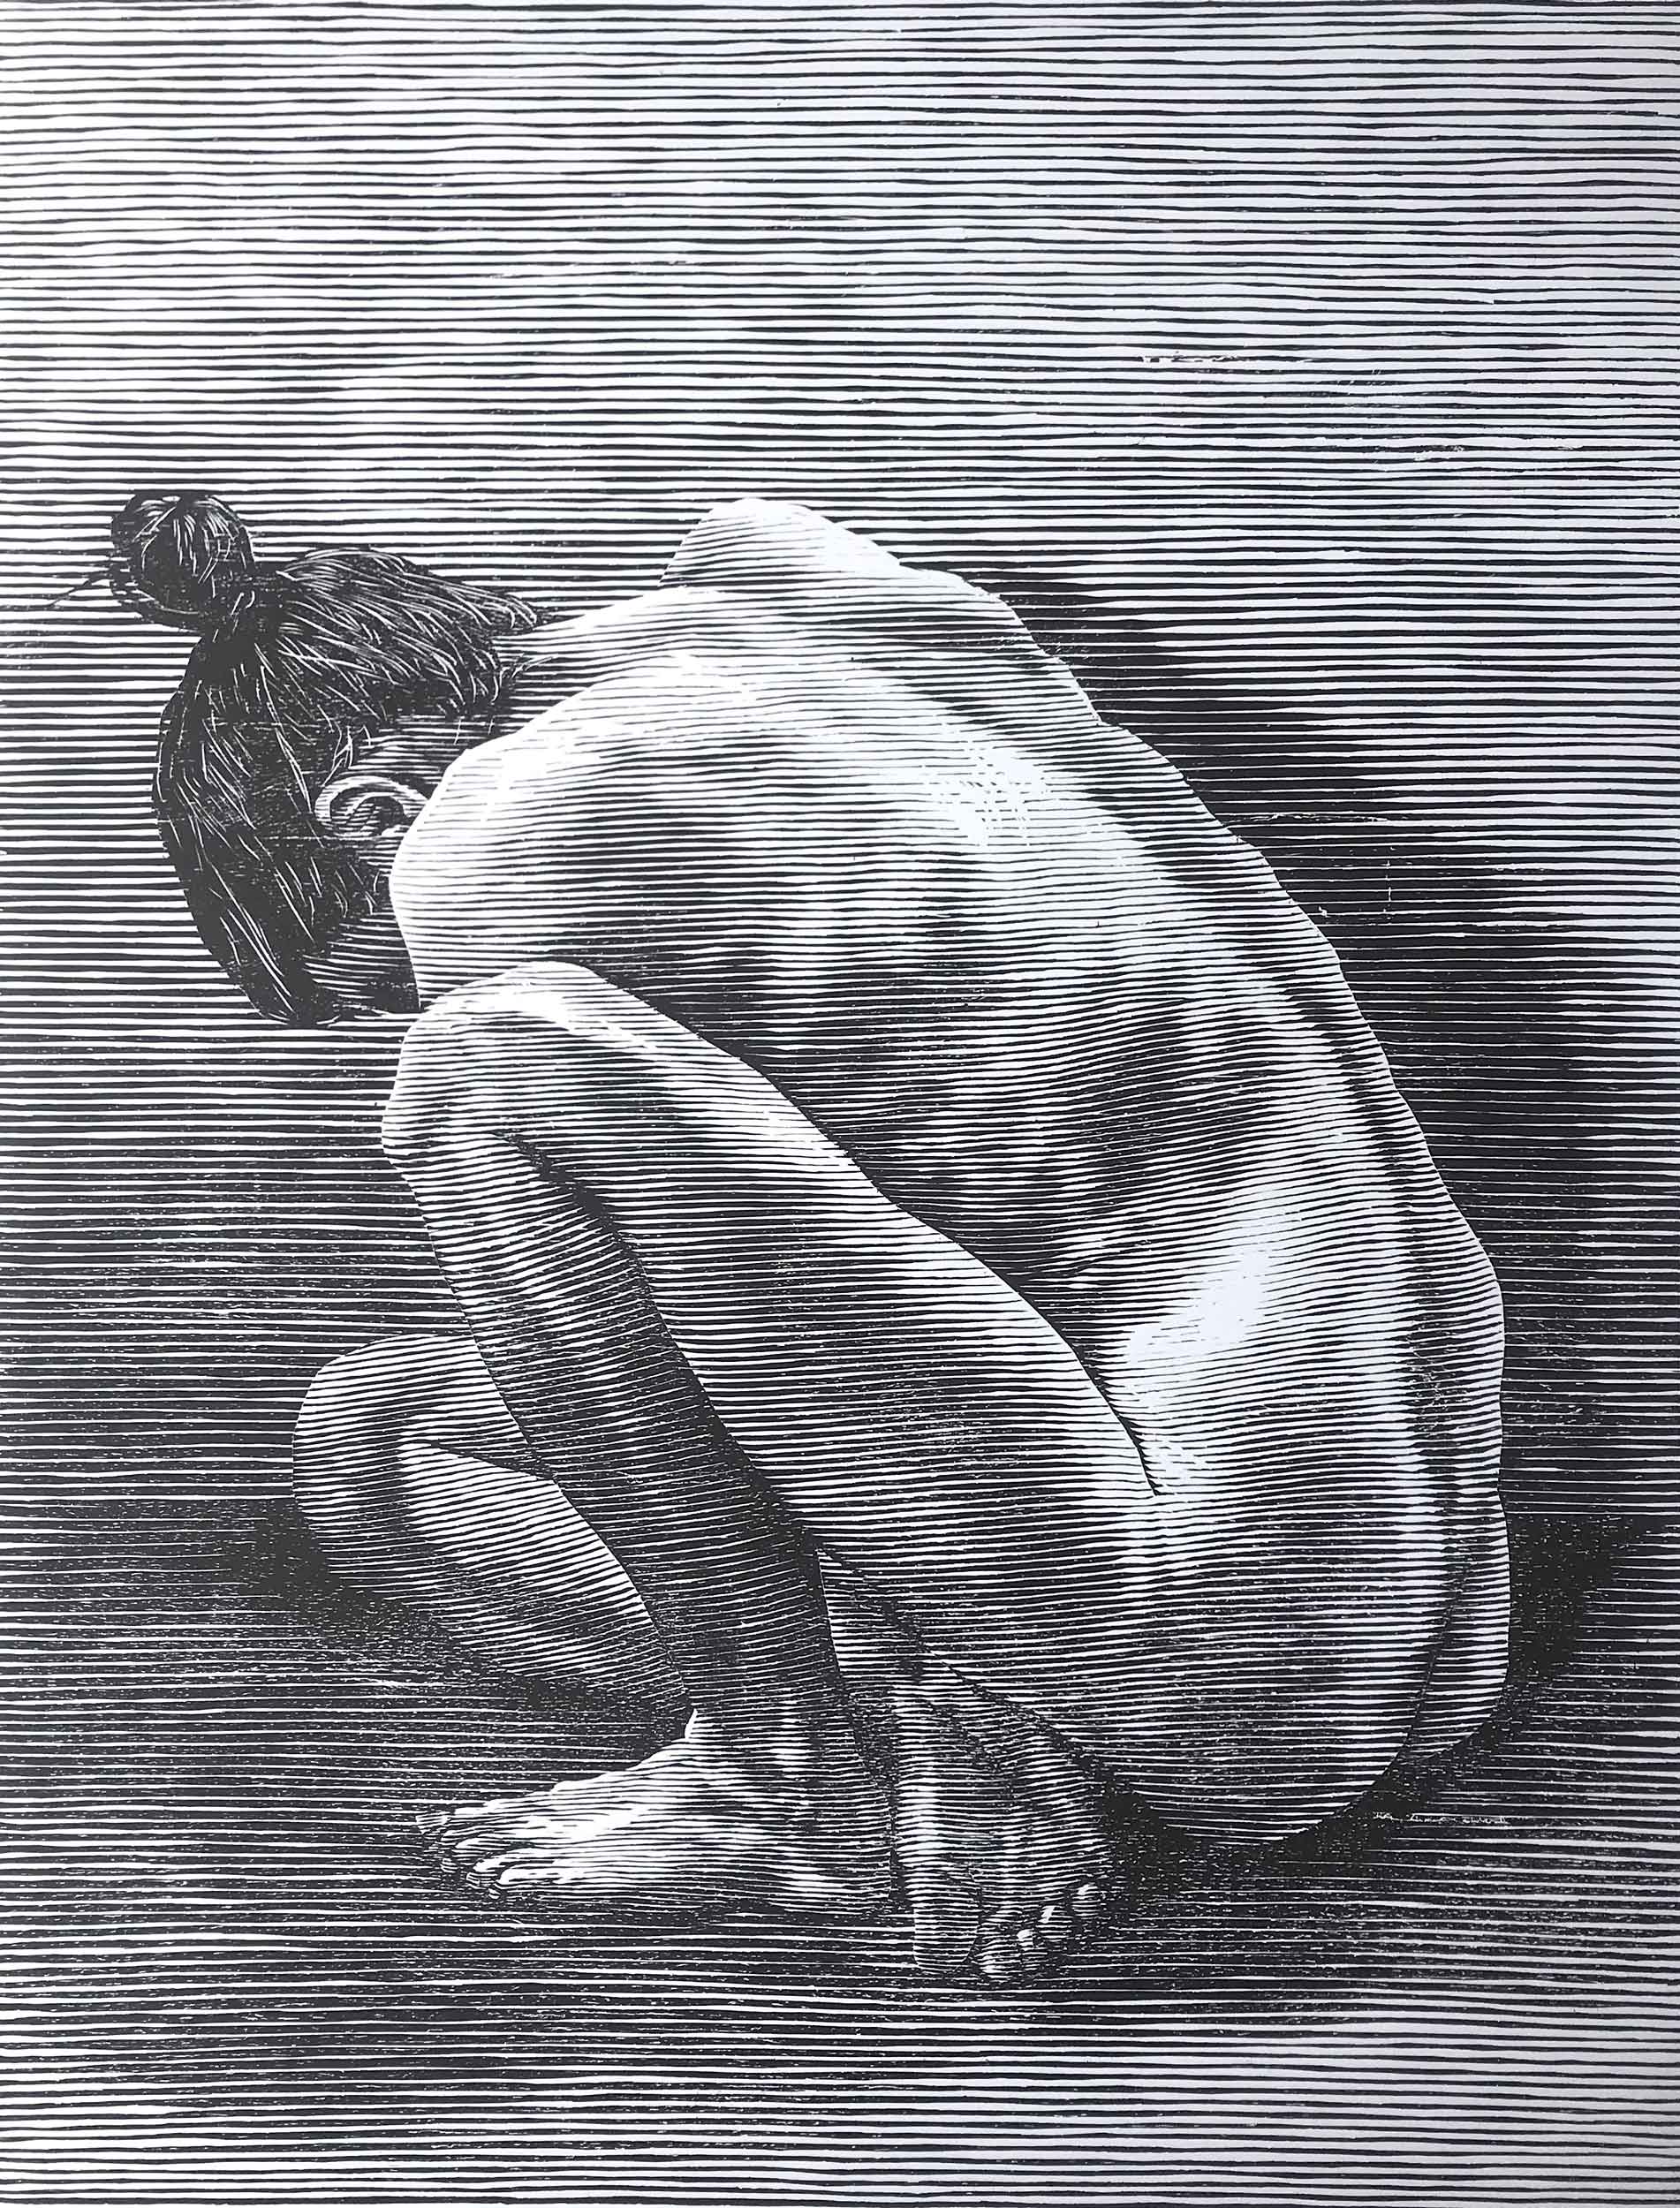 Crouching Figure, 2017